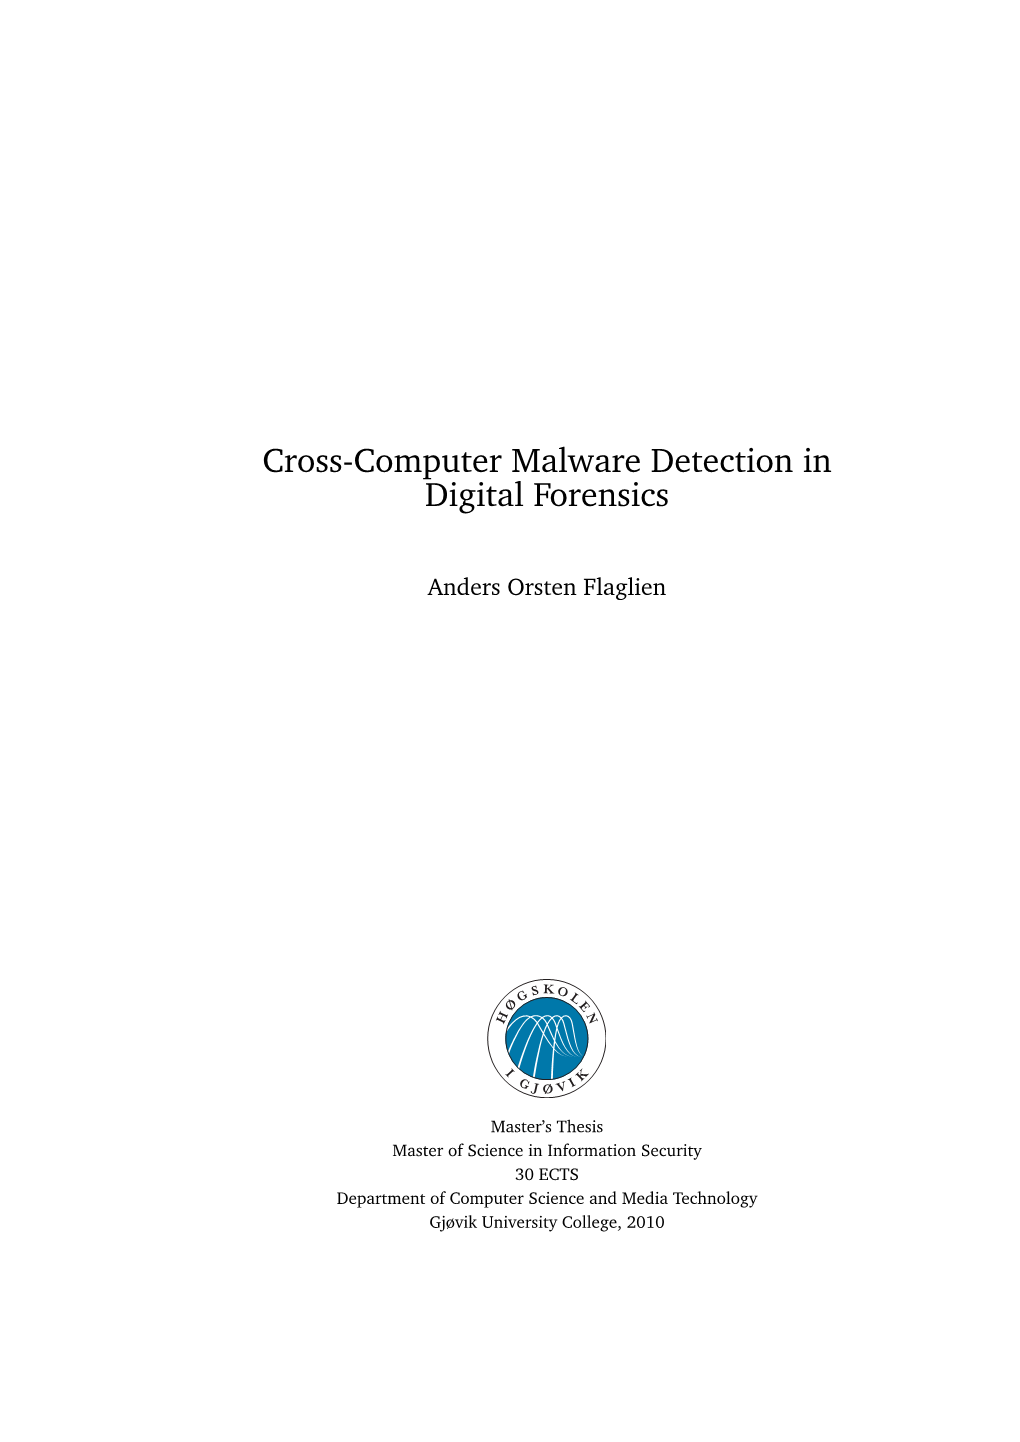 Cross-Computer Malware Detection in Digital Forensics